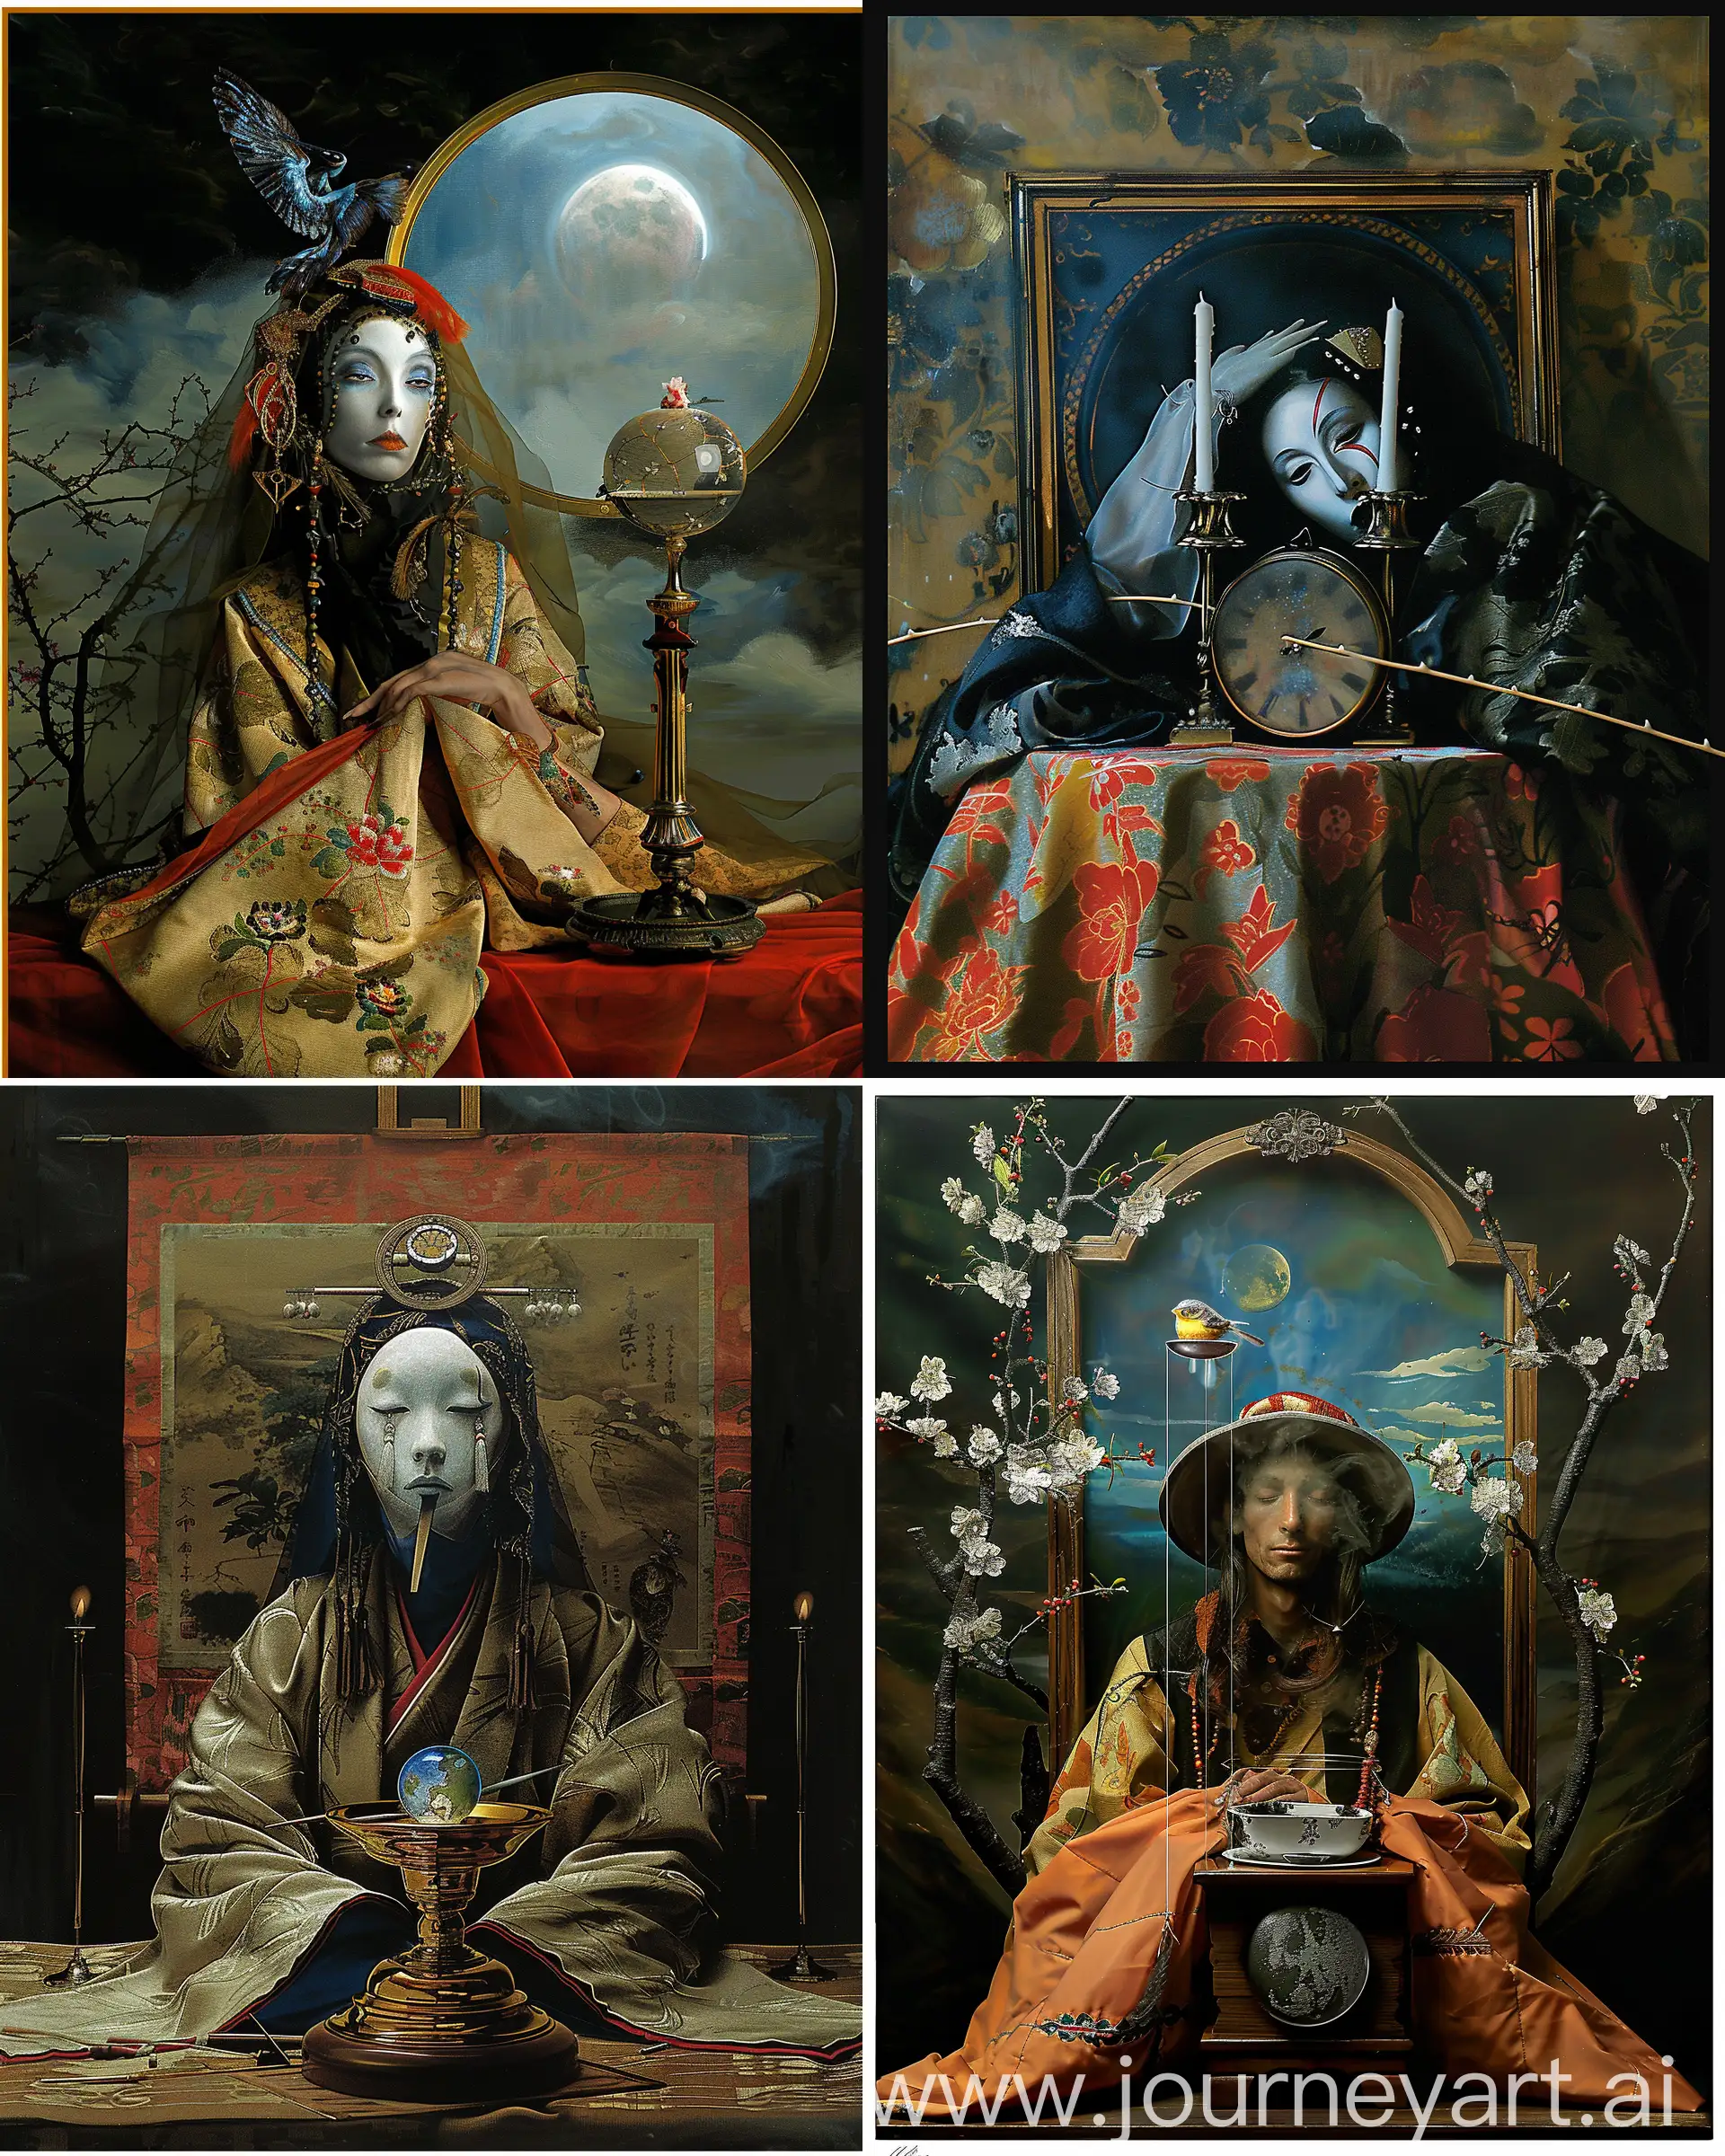 https://i.postimg.cc/90G0HMCd/s-l1600.jpg,https://i.postimg.cc/KYG222nX/Untitled-1.jpg, staged photography in style of jeffrey g bachelor paintings,jeffrey g bachelor, japanese surrealism --ar 4:5